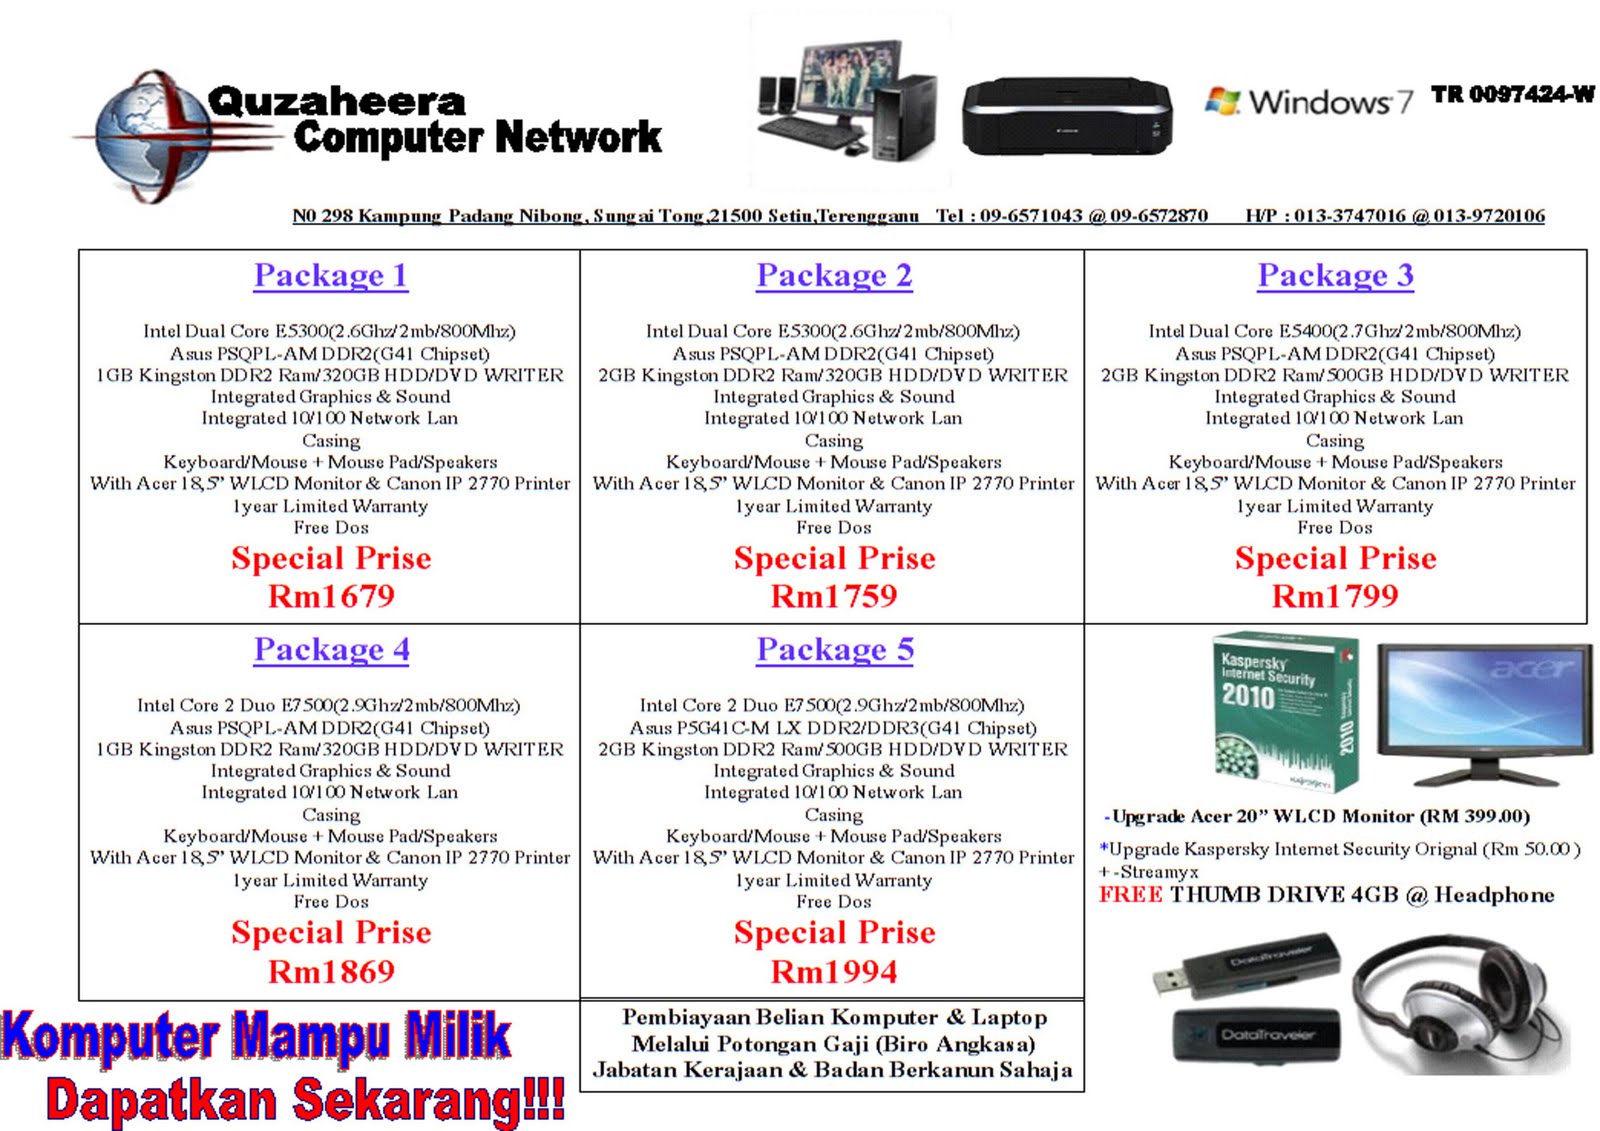 Quzaheera Computer Network (TR0097424-W): Senarai Harga Komputer